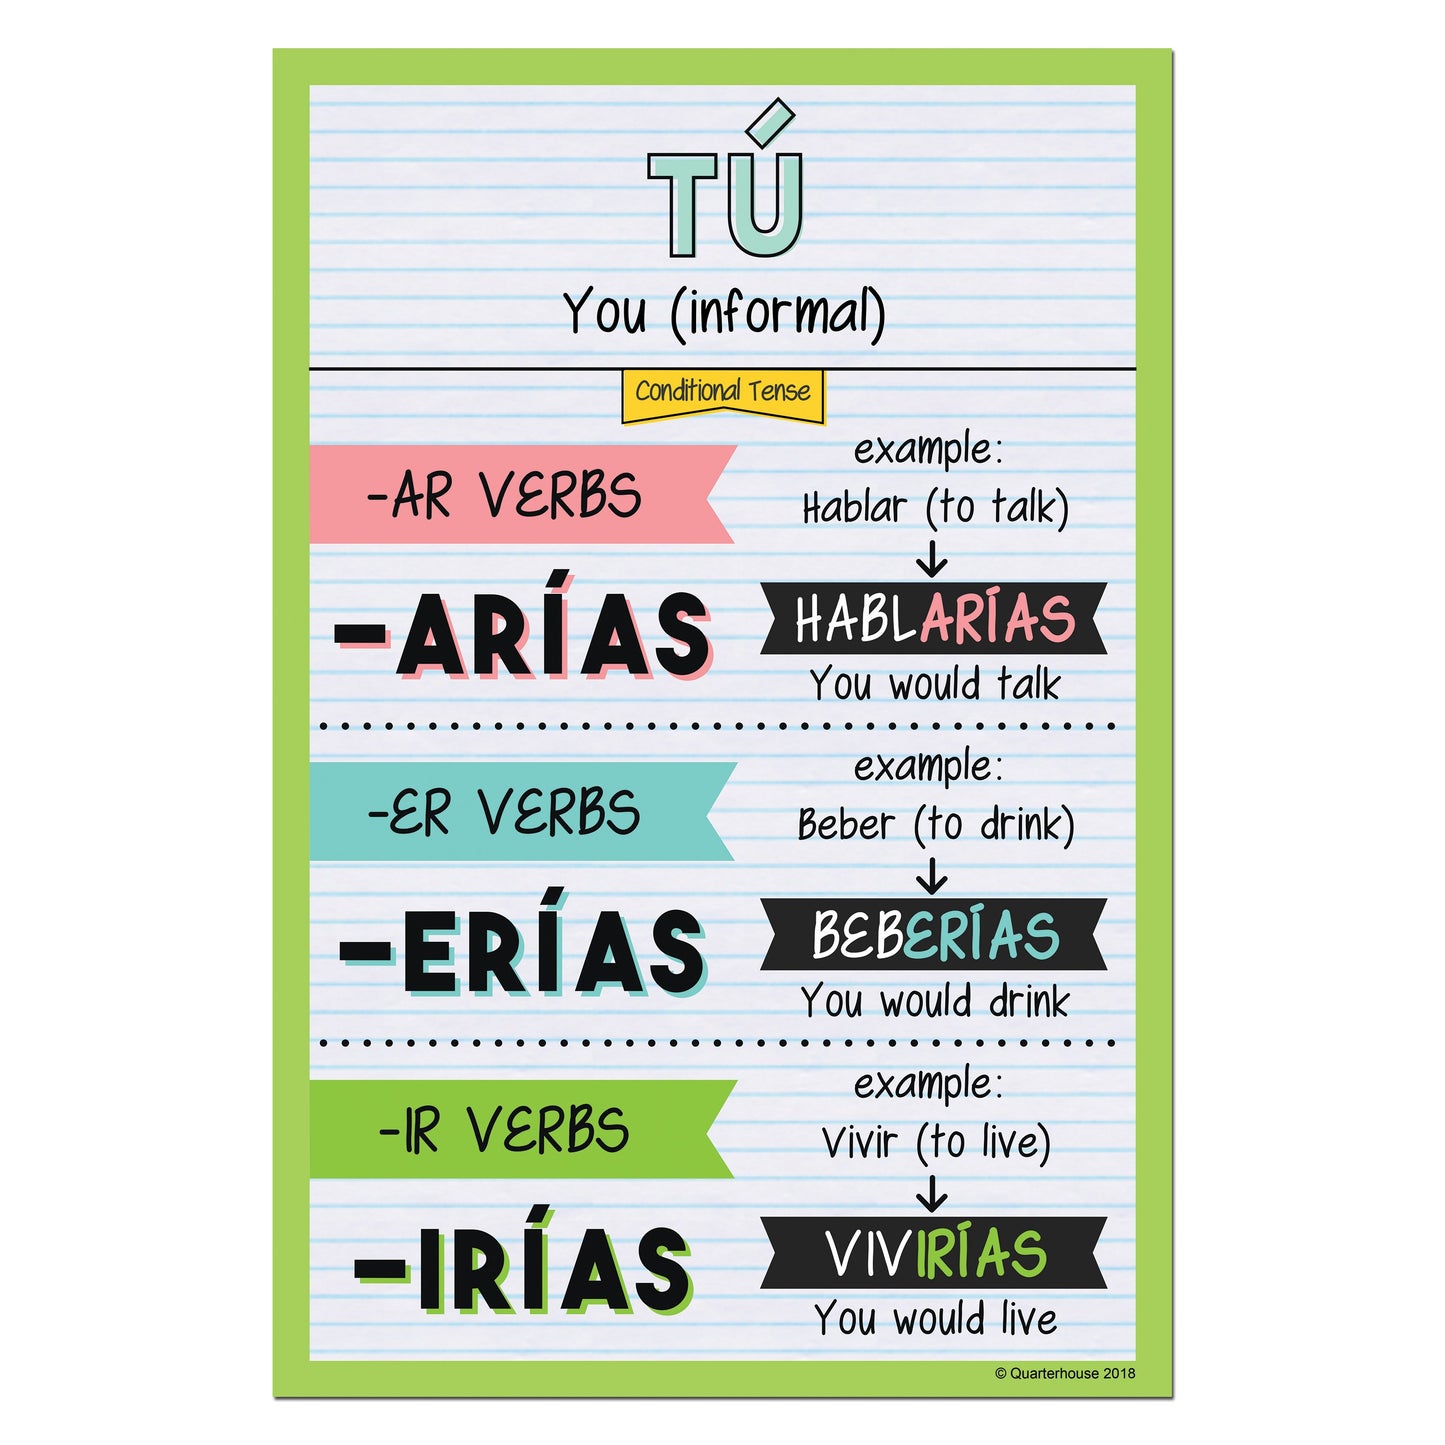 Quarterhouse Tú - Conditional Tense Spanish Verb Conjugation Poster, Spanish and ESL Classroom Materials for Teachers